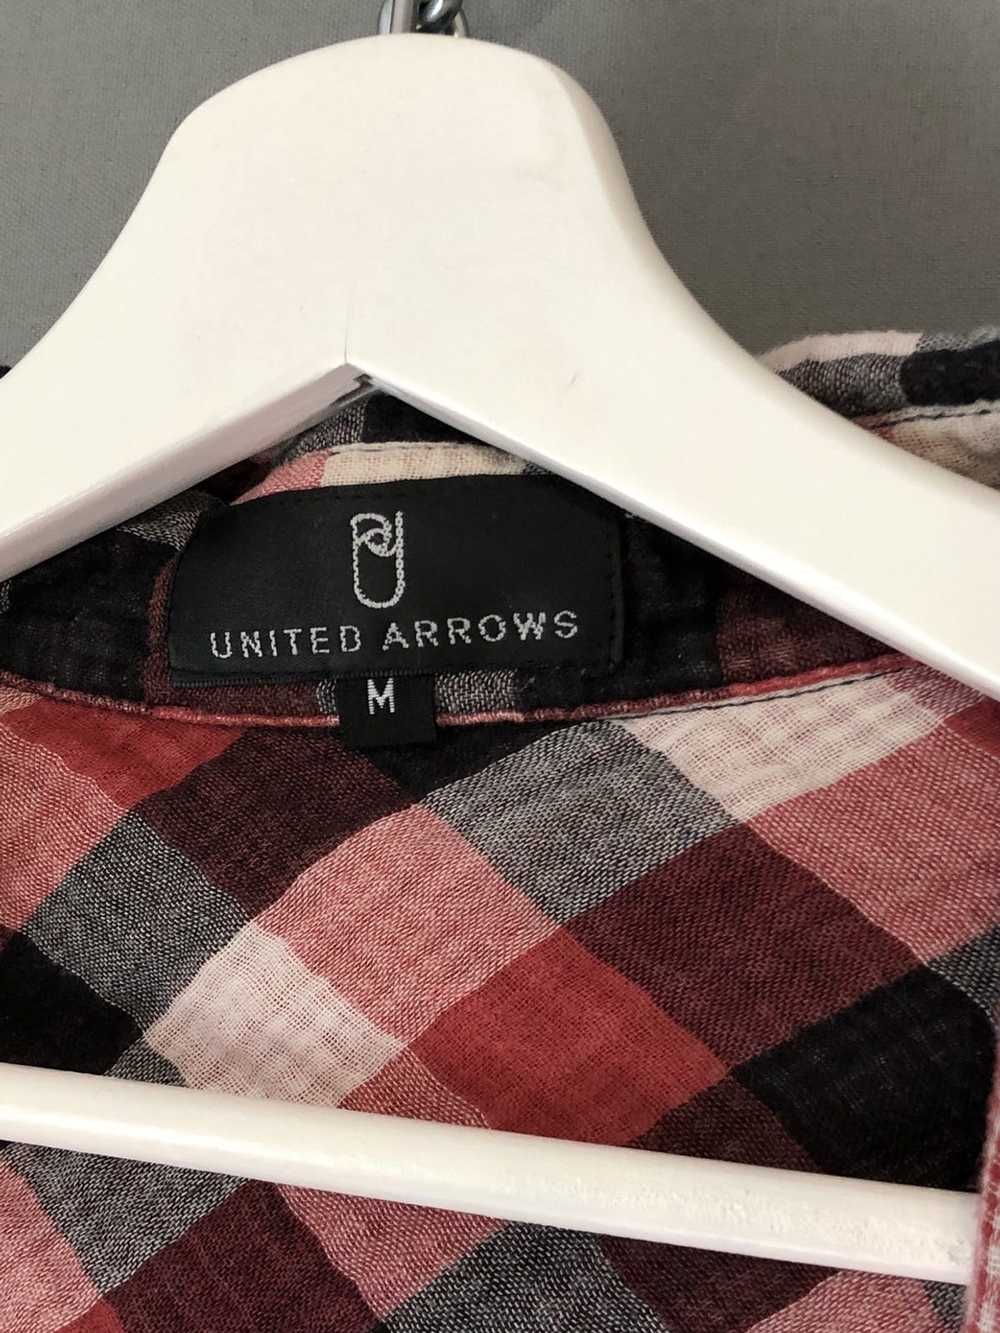 United Arrows United arrows shirt - image 5